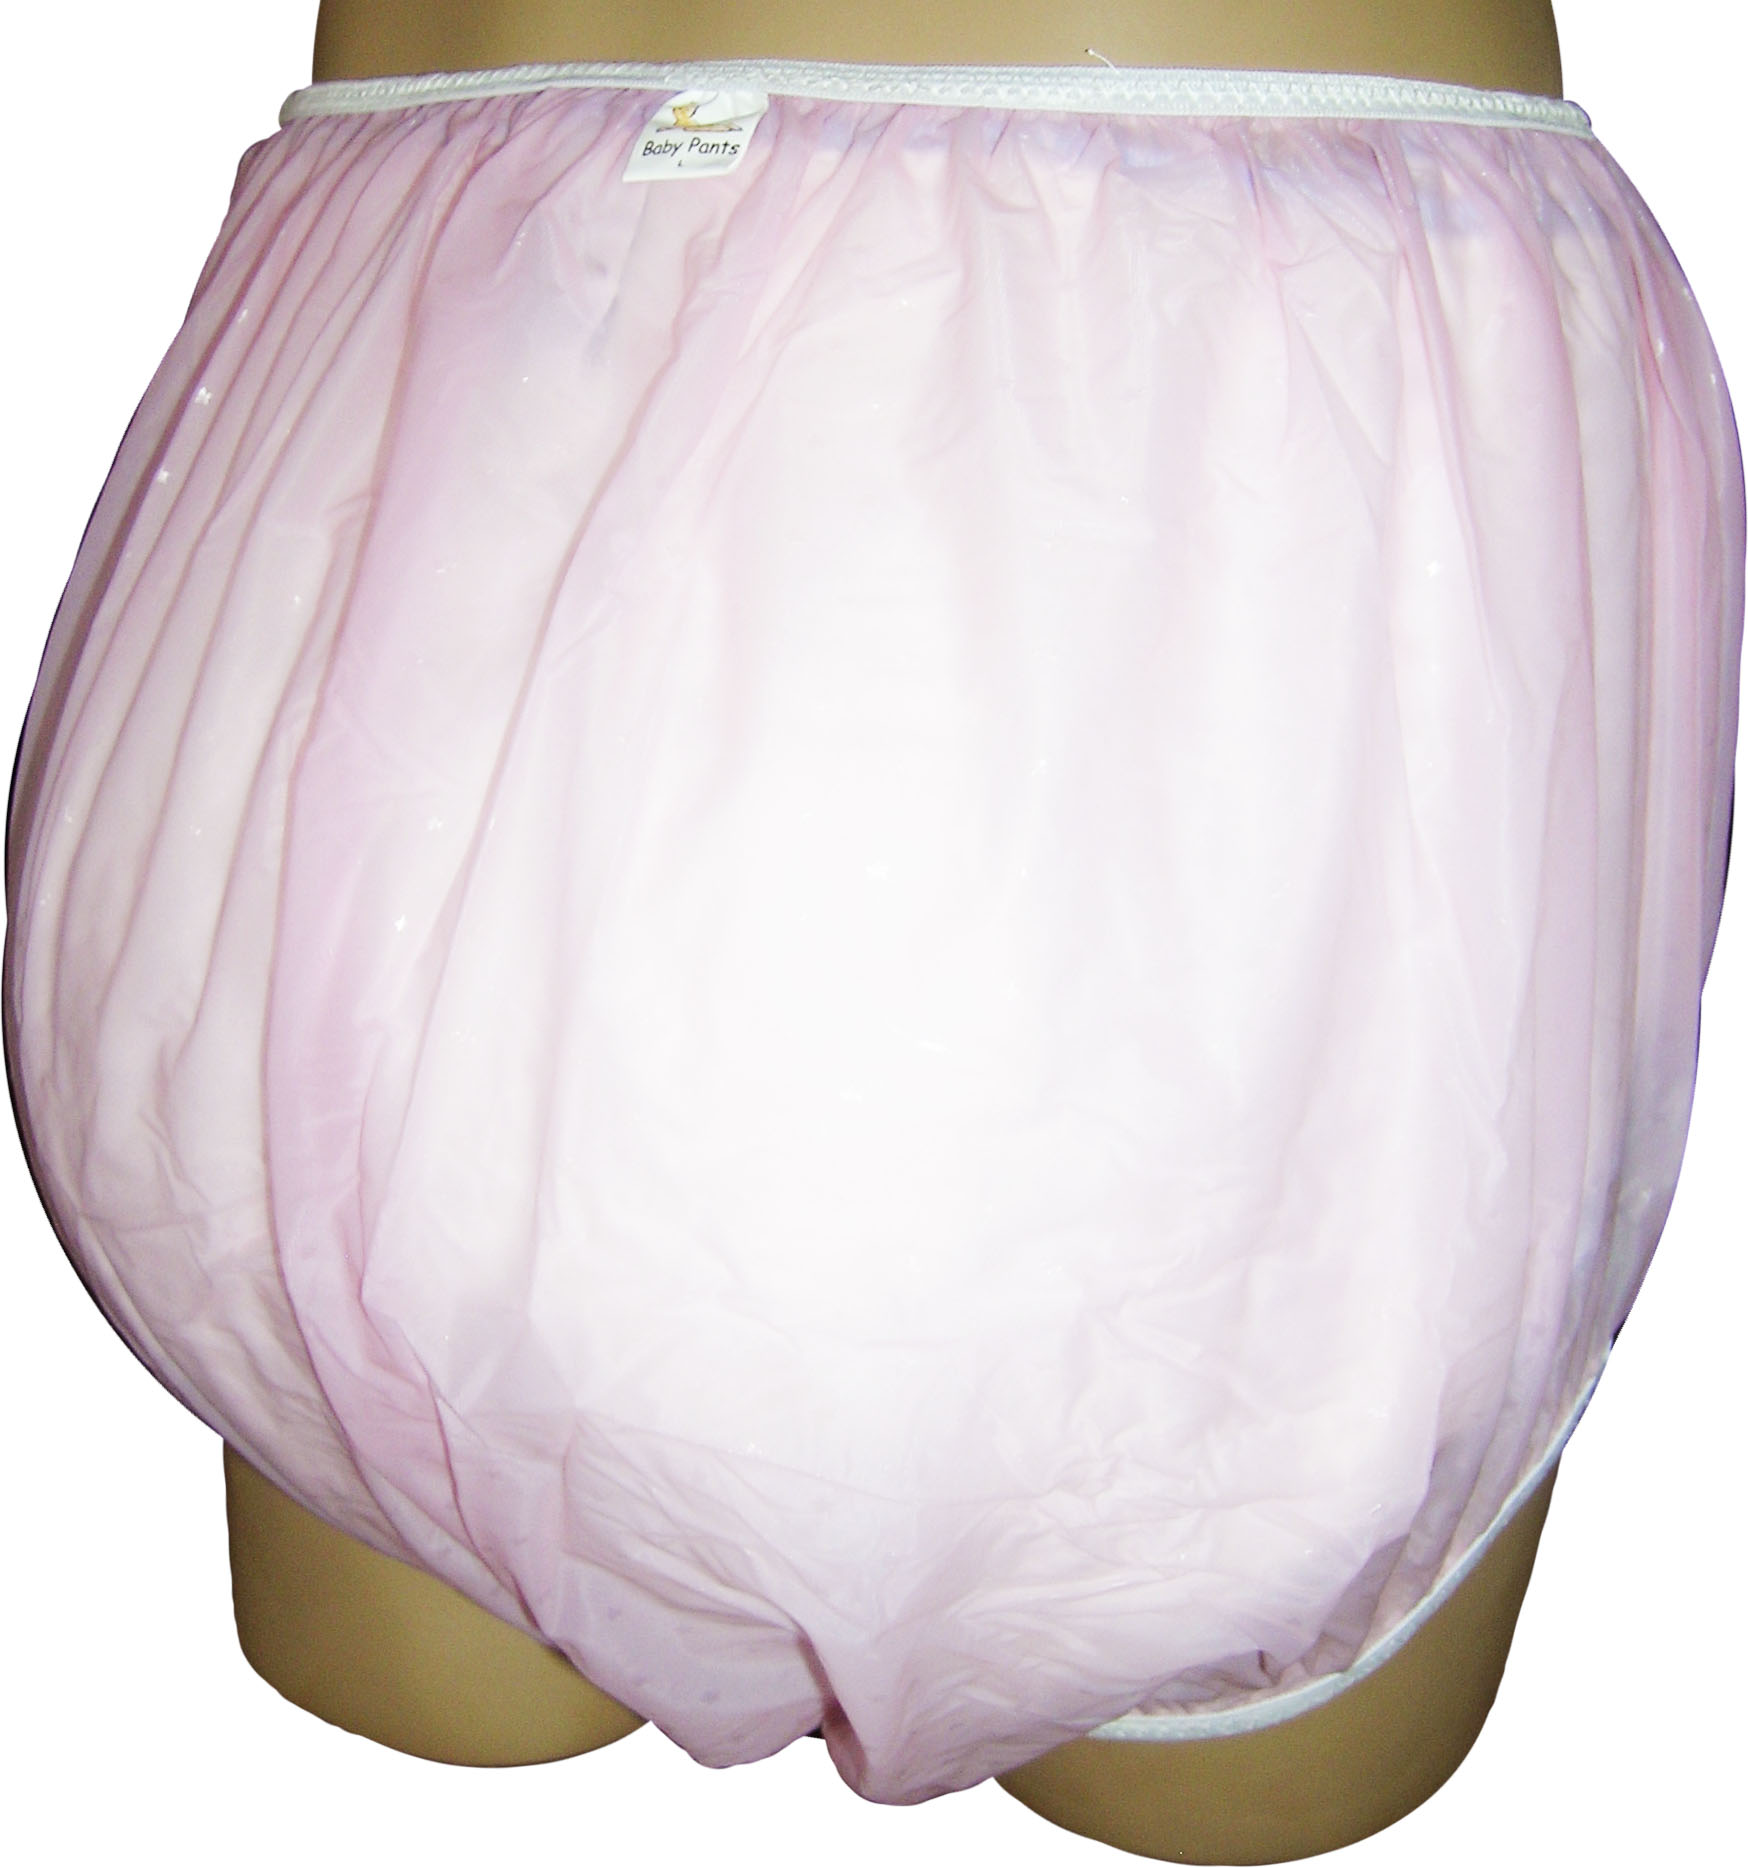 Latex Rubber Adult Baby Pants - Latex Clothing UK London